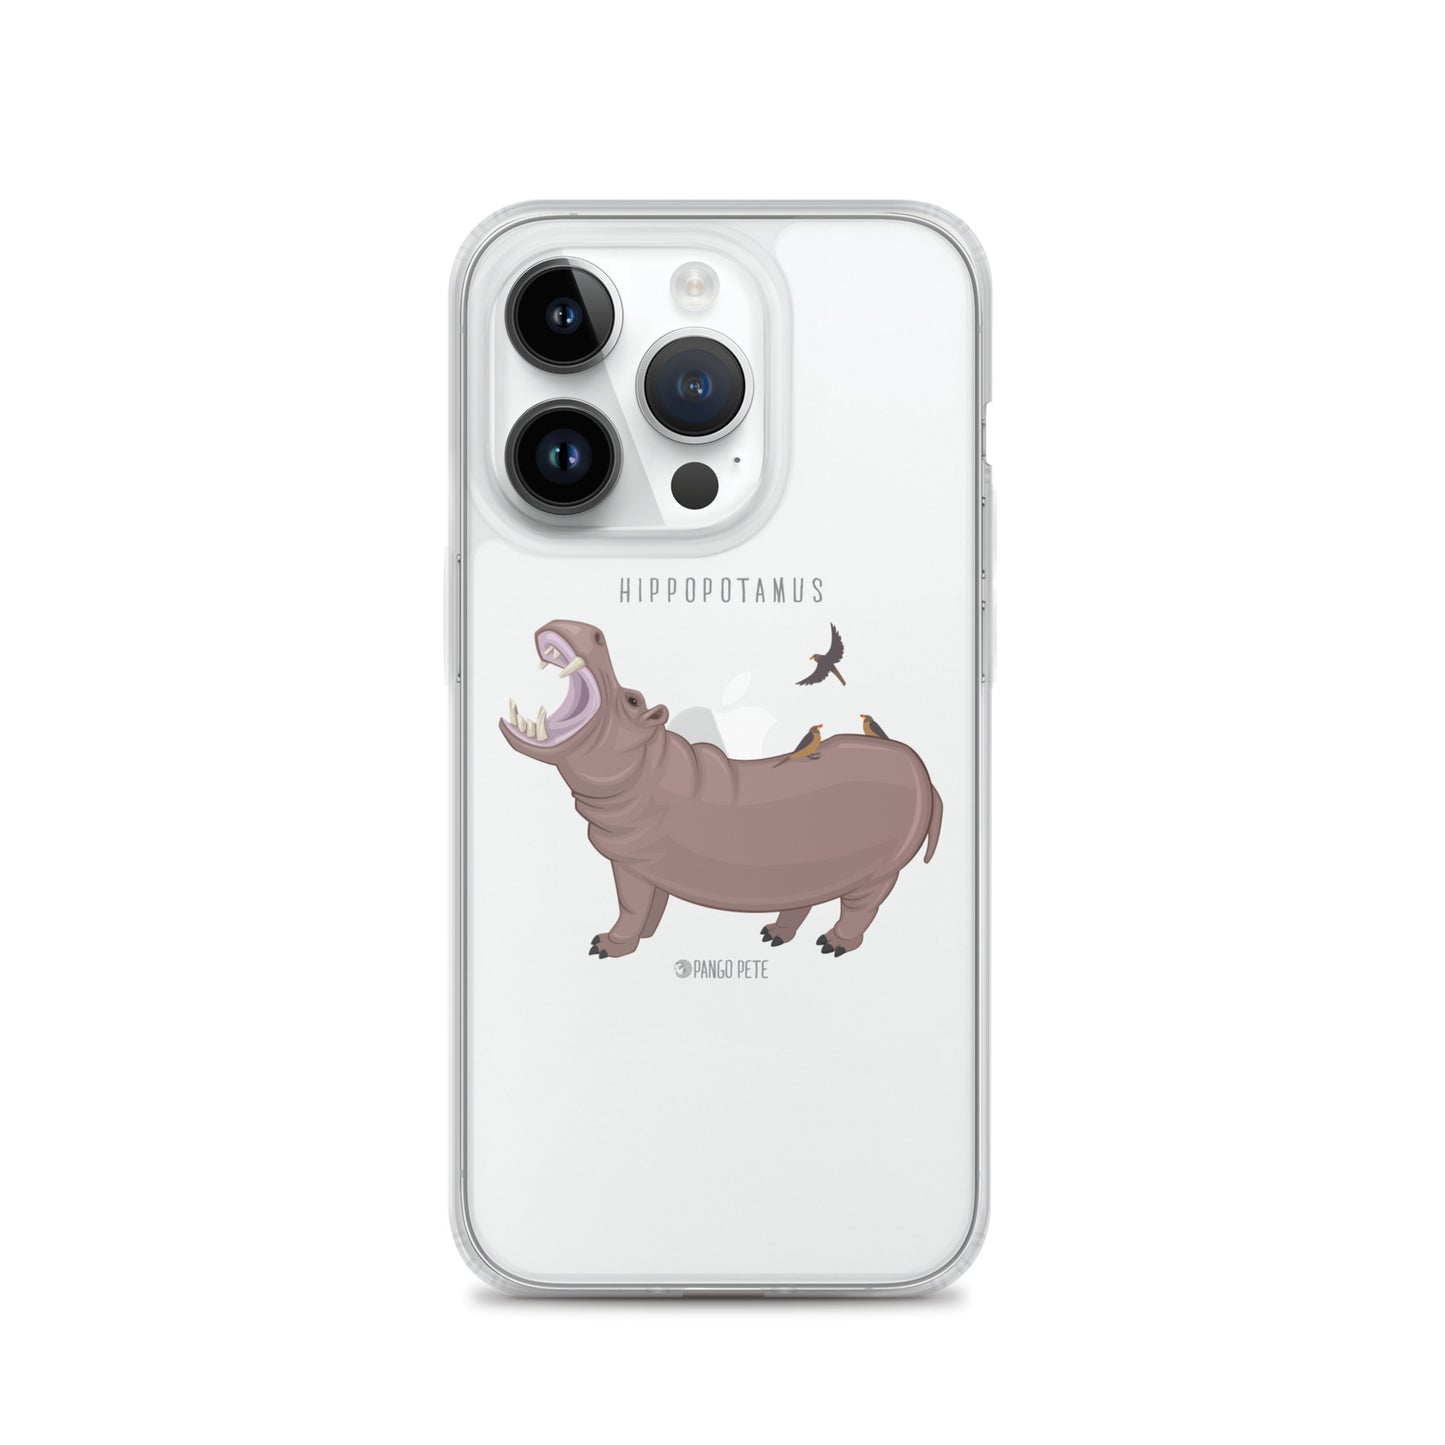 Hippo iPhone Case